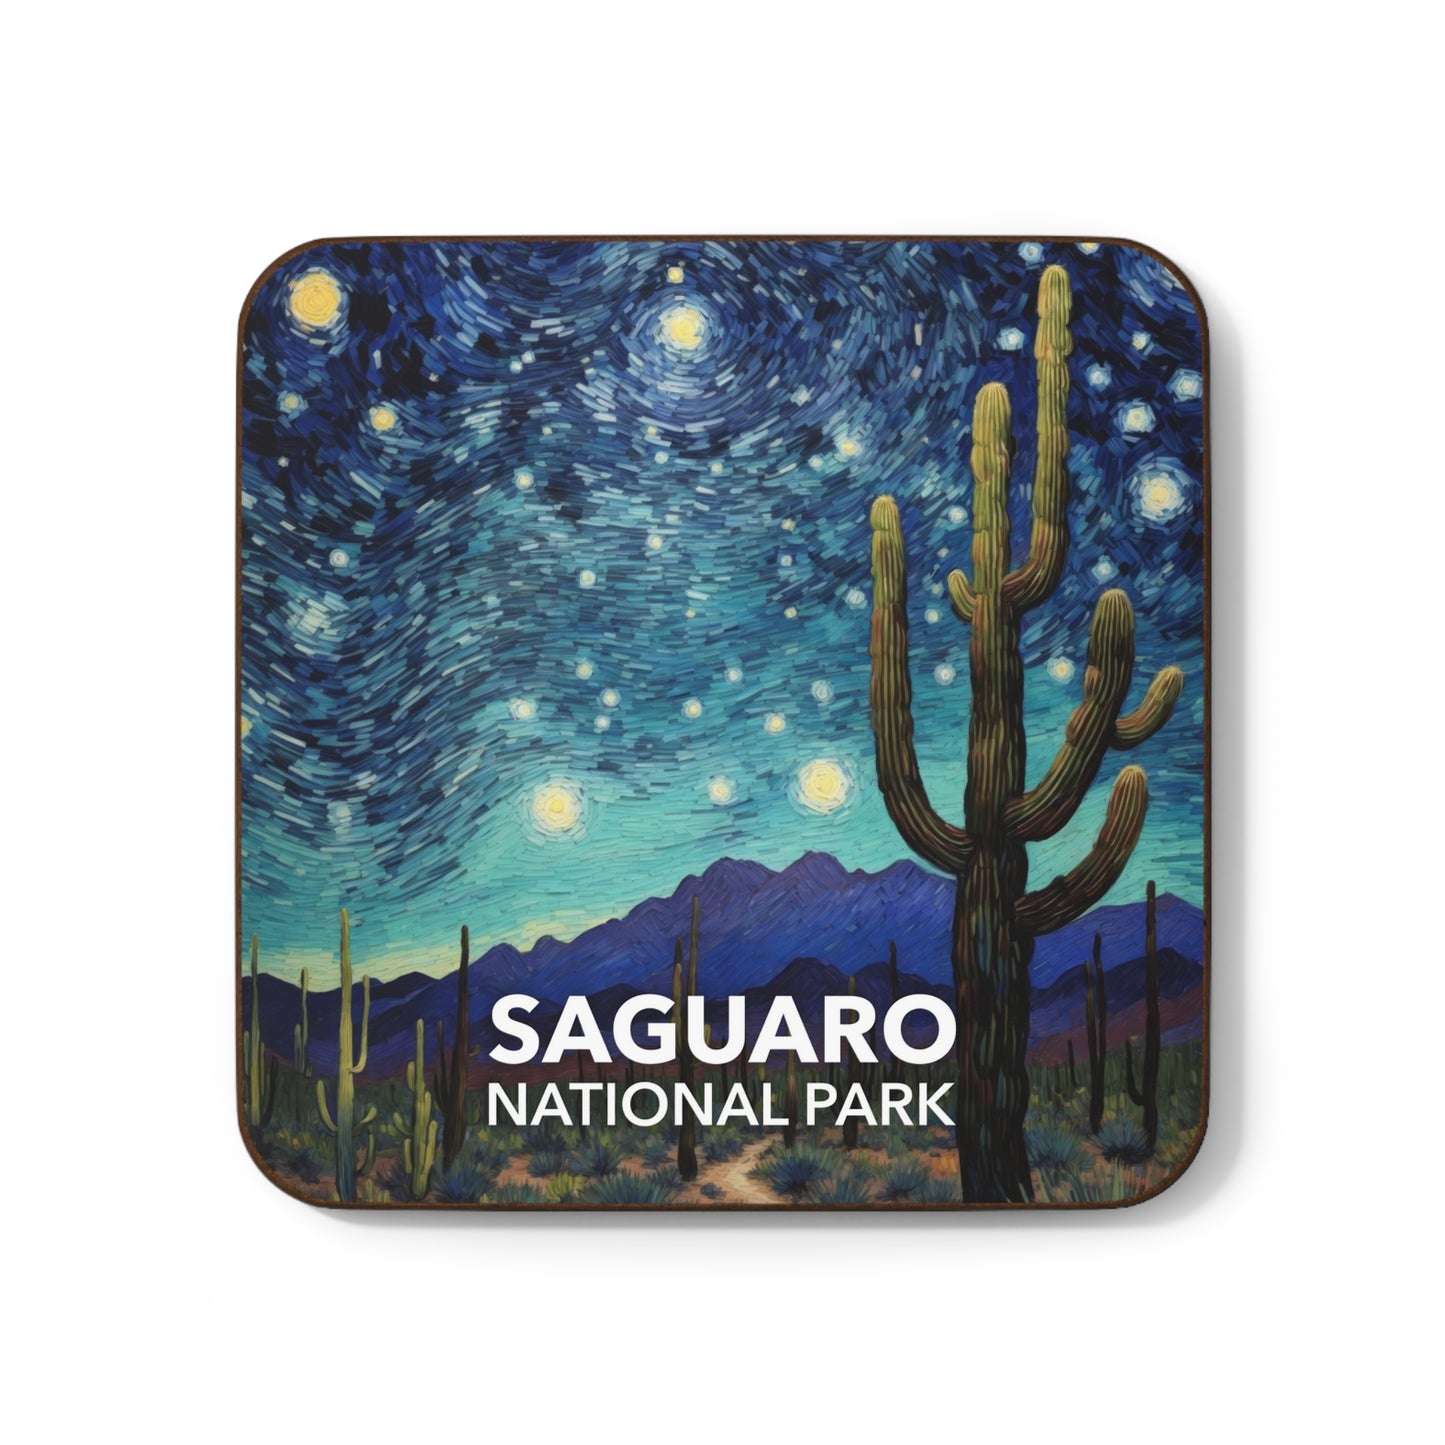 Saguaro National Park Coaster - The Starry Night